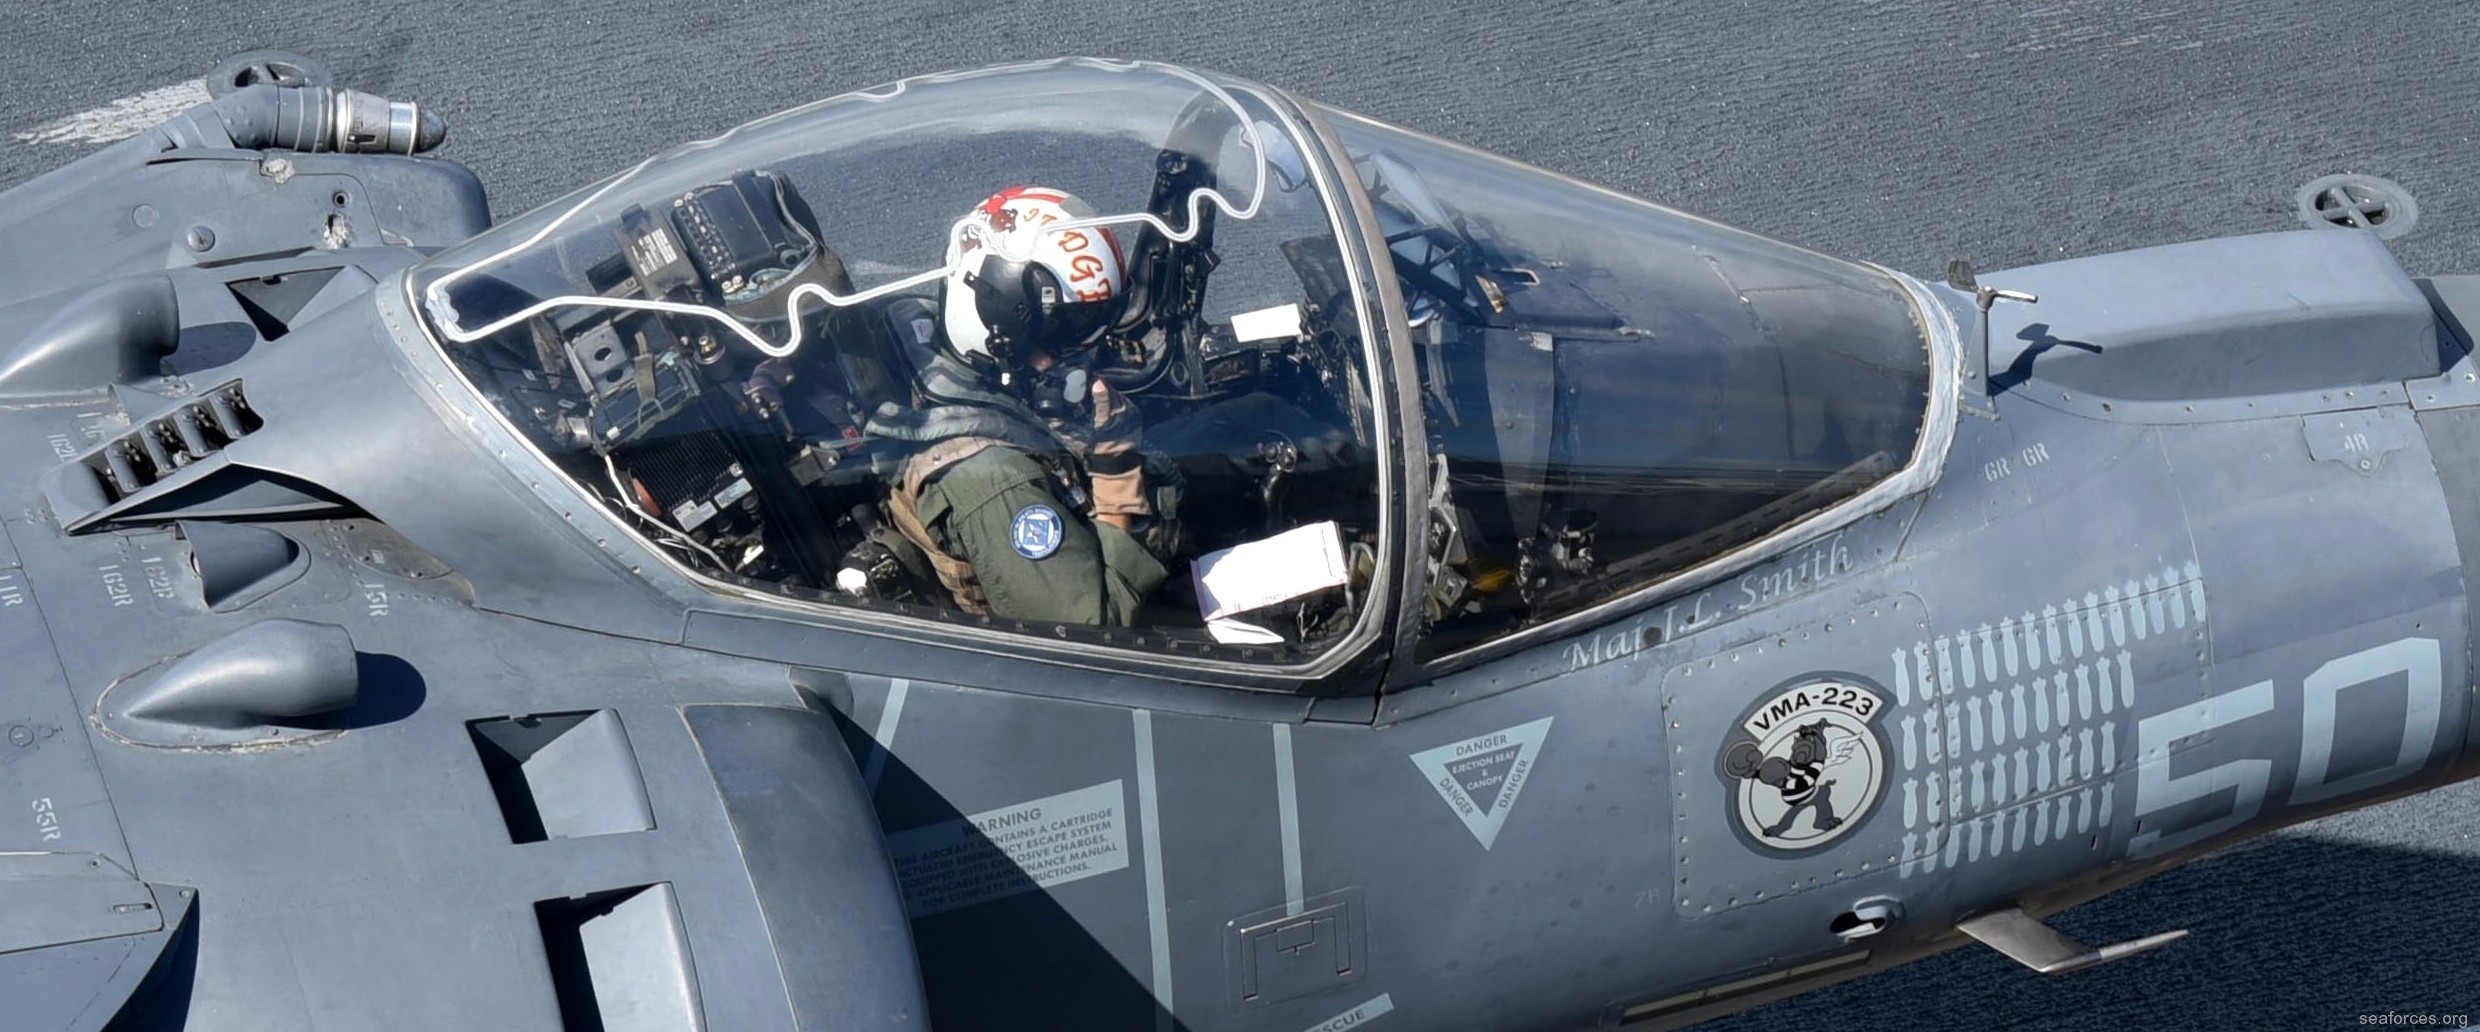 marine attack squadron vma-223 bulldogs av-8b harrier cockpit view 2016 95